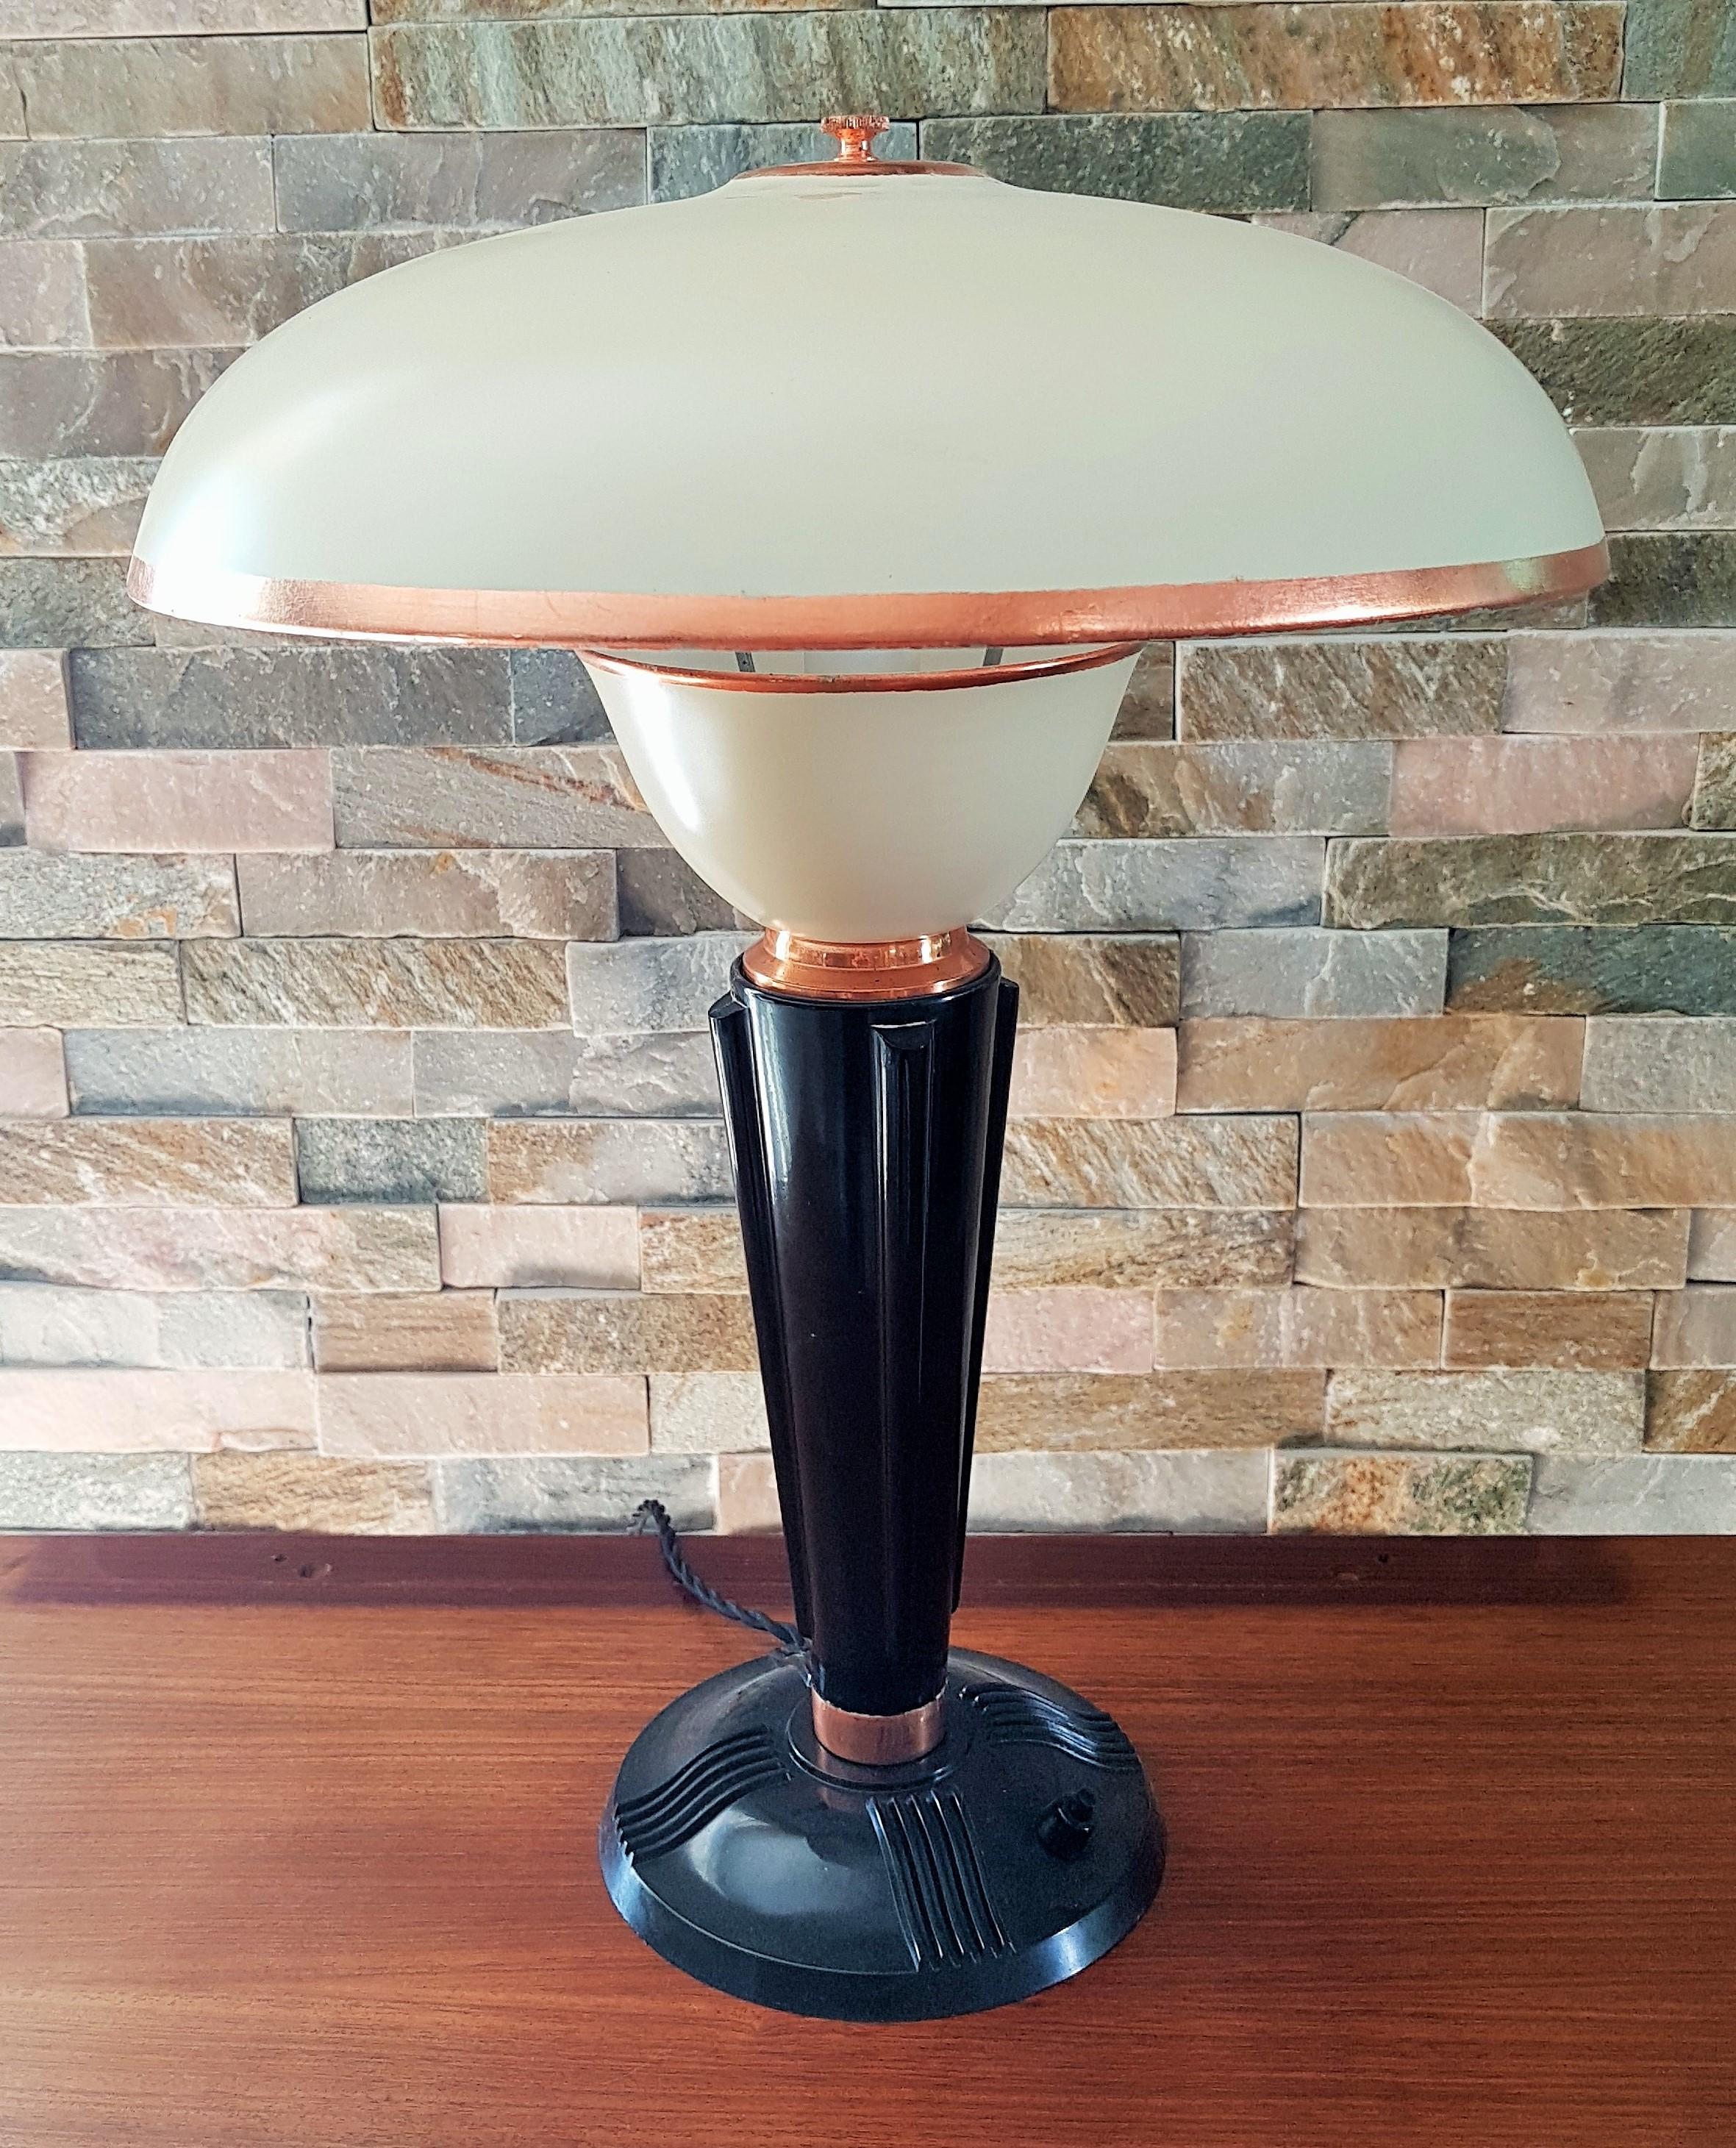 Eileen Gray for Jumo French Art Deco Bakelite desk/table lamp, France, 1930s.
Copper details.
Fully restored, rewired.